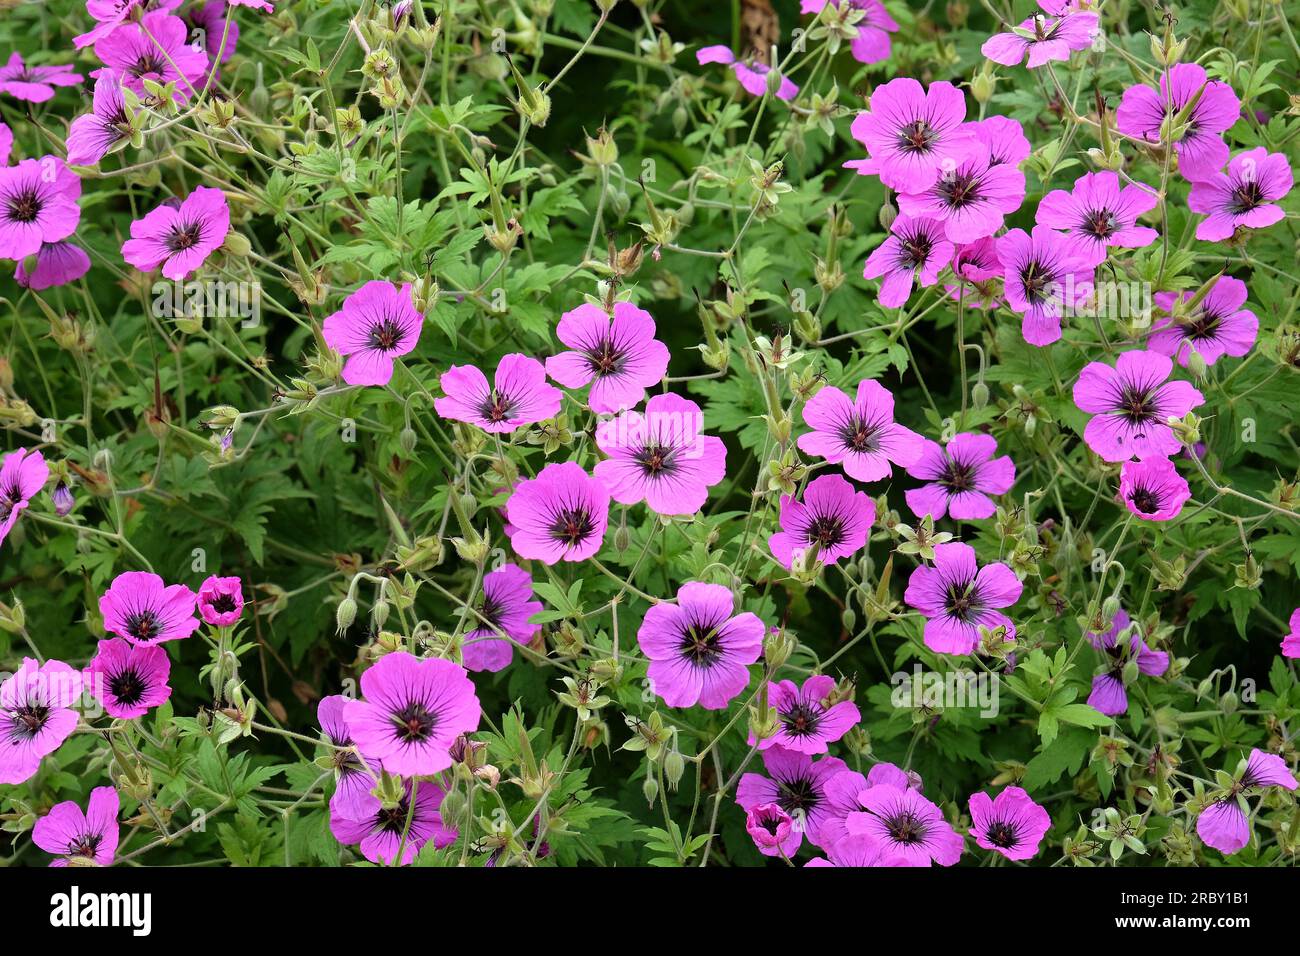 Hardy geranium 'Giuseppii' in flower. Stock Photo